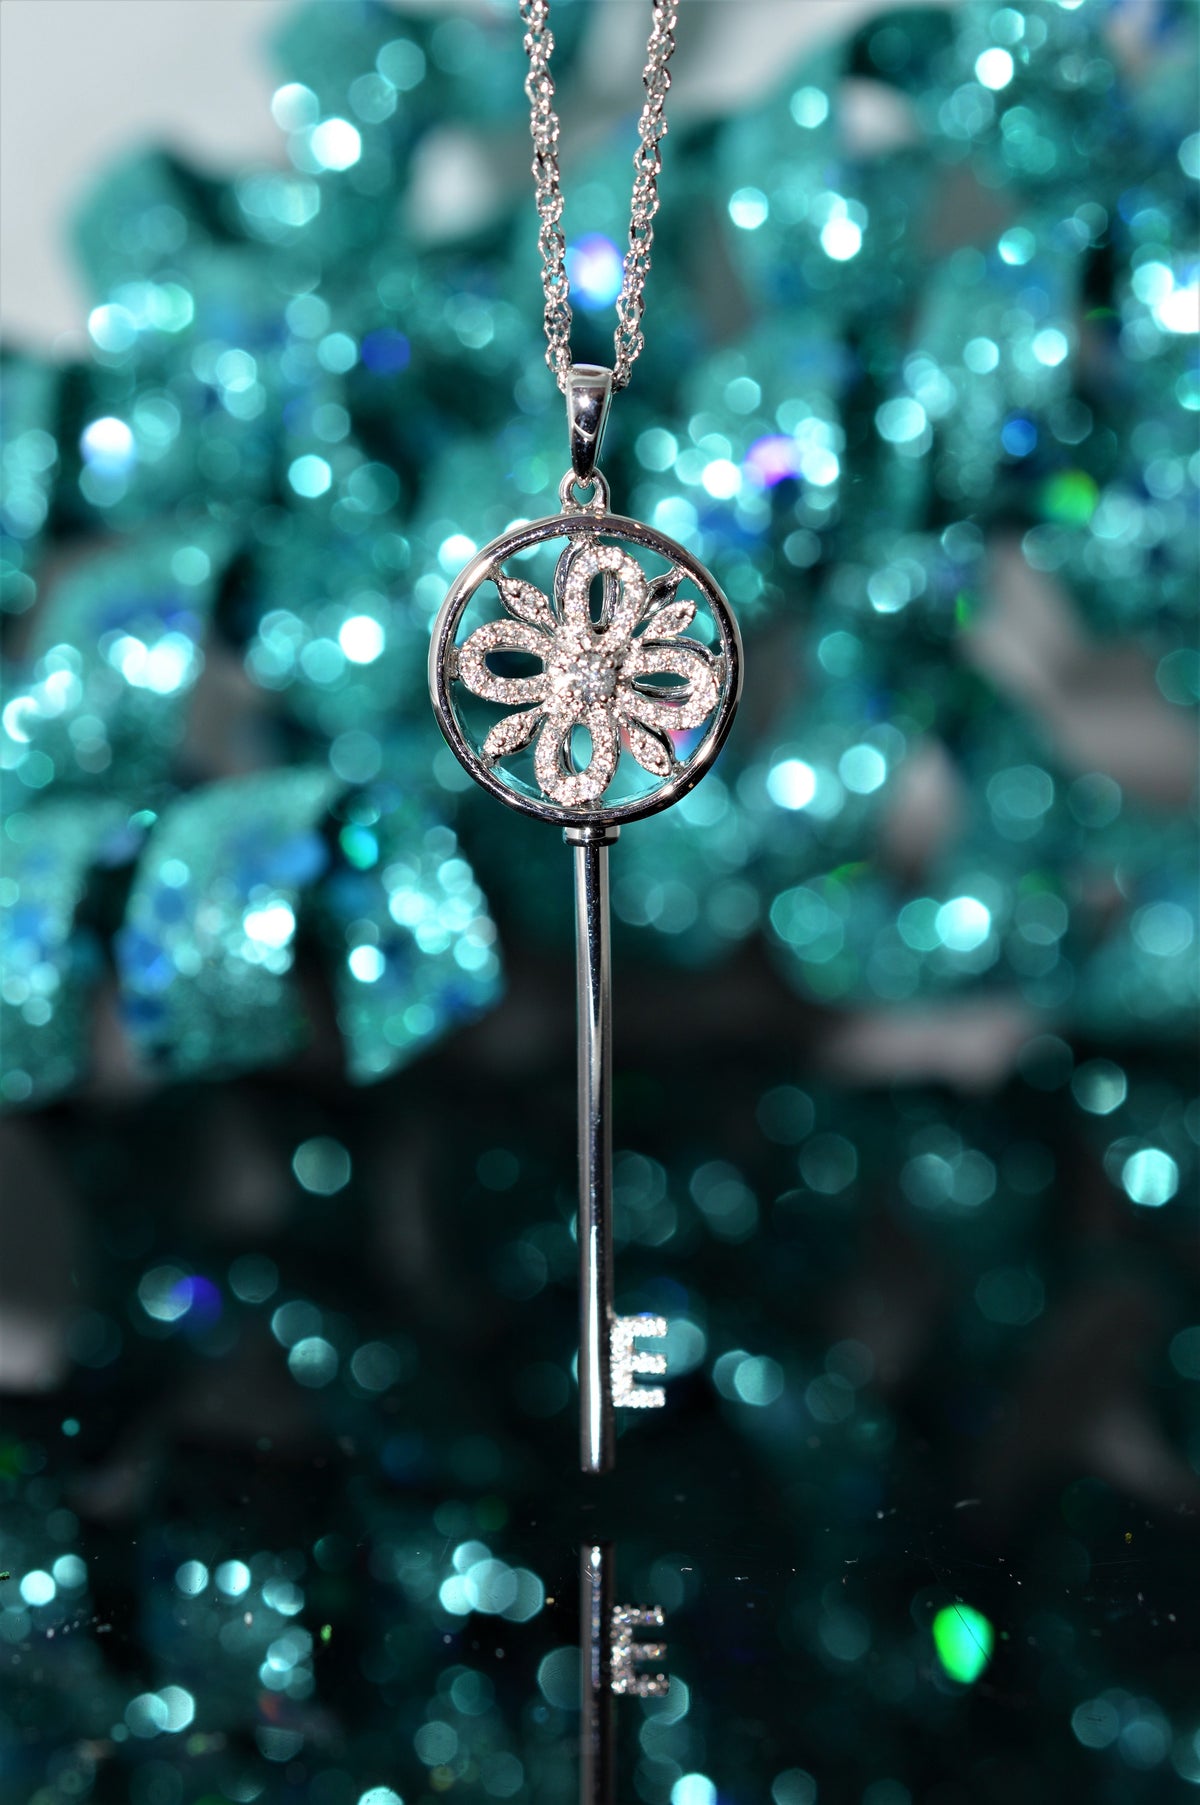 18K White Gold Diamond Spinner Key Necklace on a 14K Chain